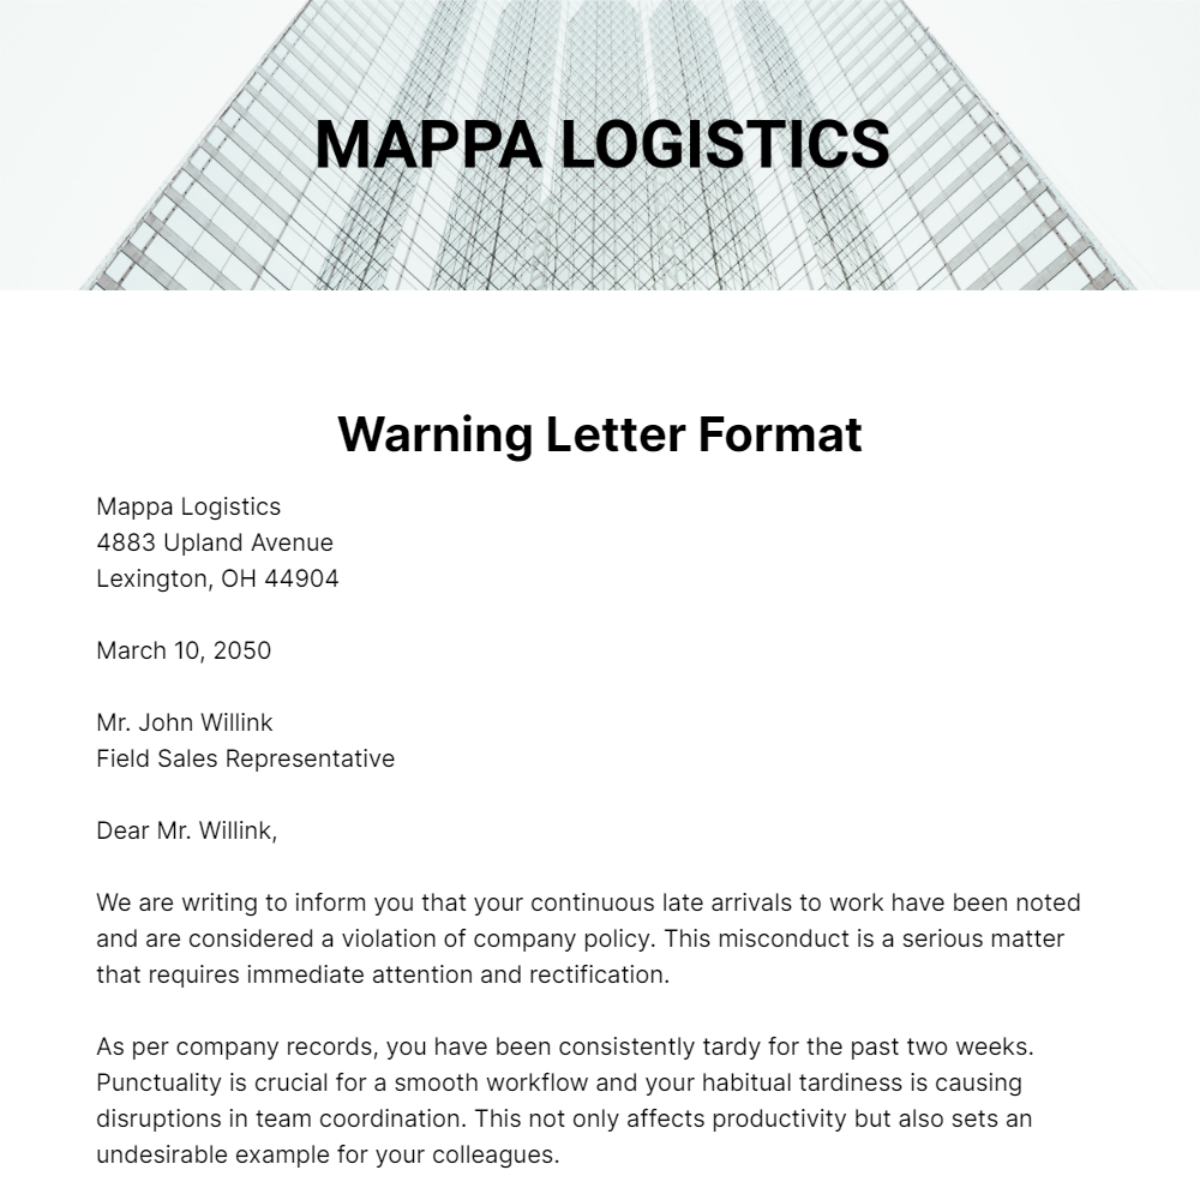 Warning Letter Format Template